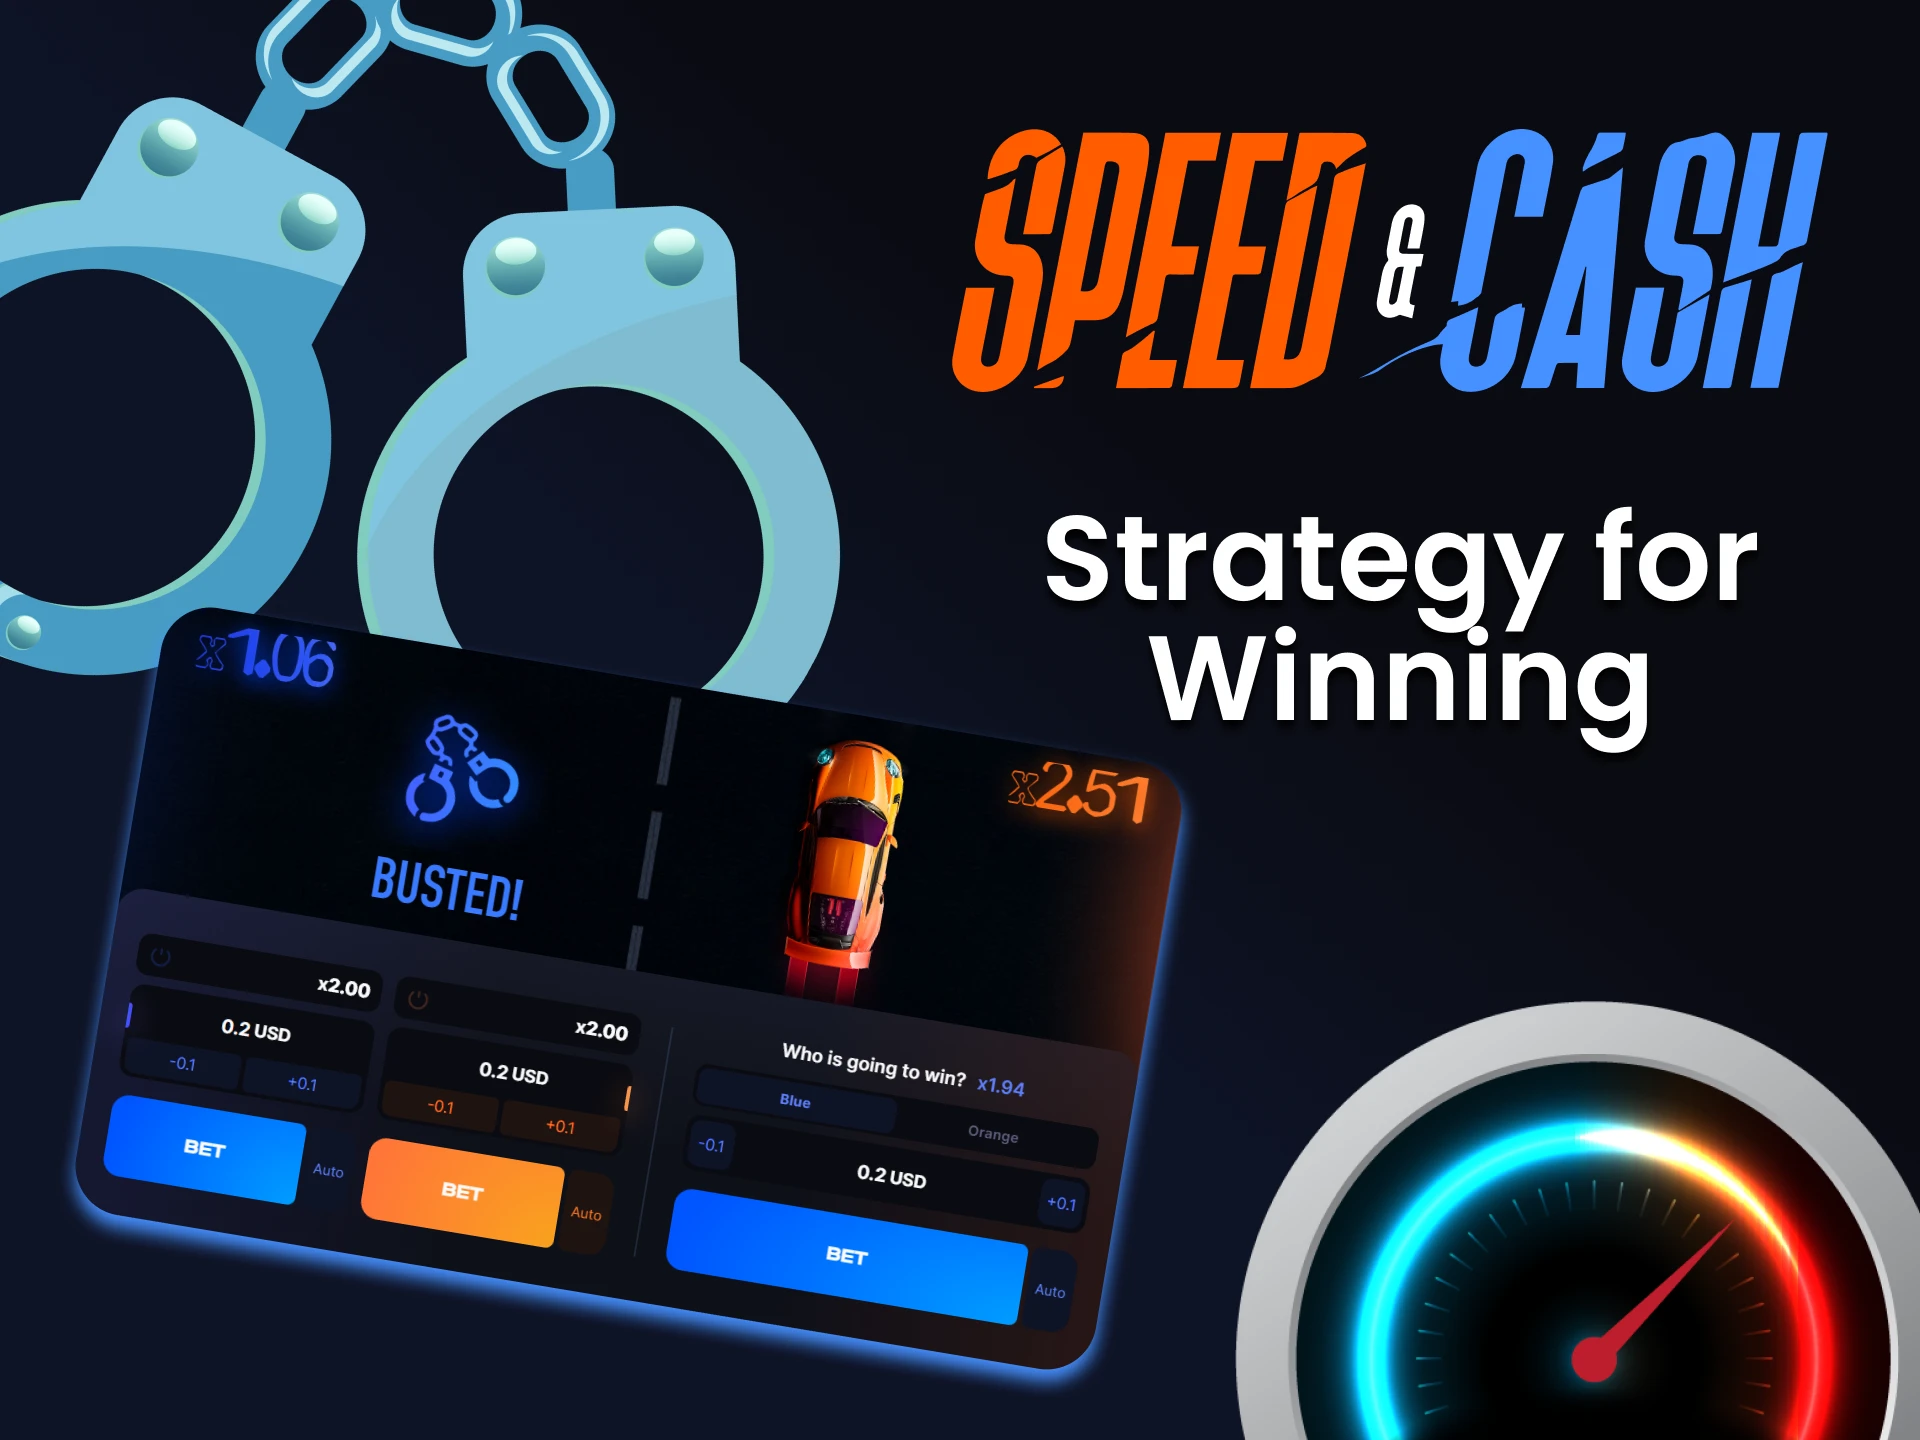 estratégia Speed n Cash 1win 